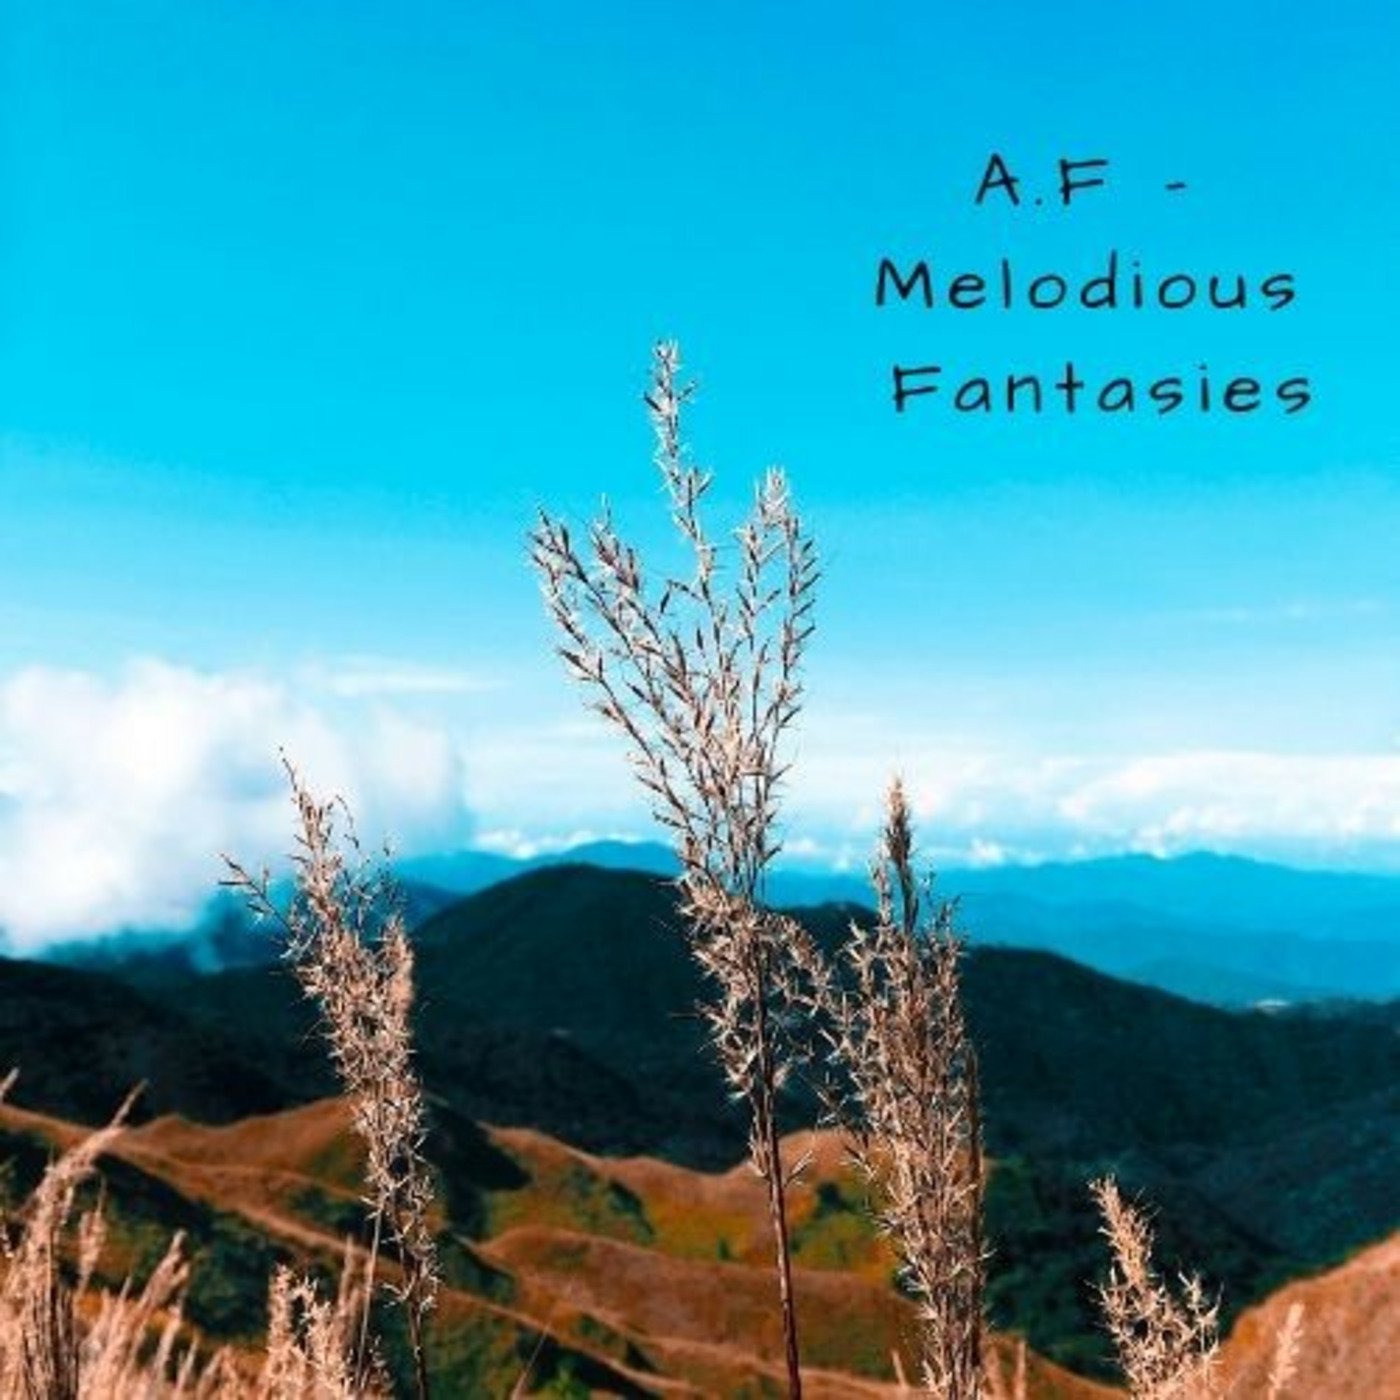 A.F - Melodious Fantasies 2019